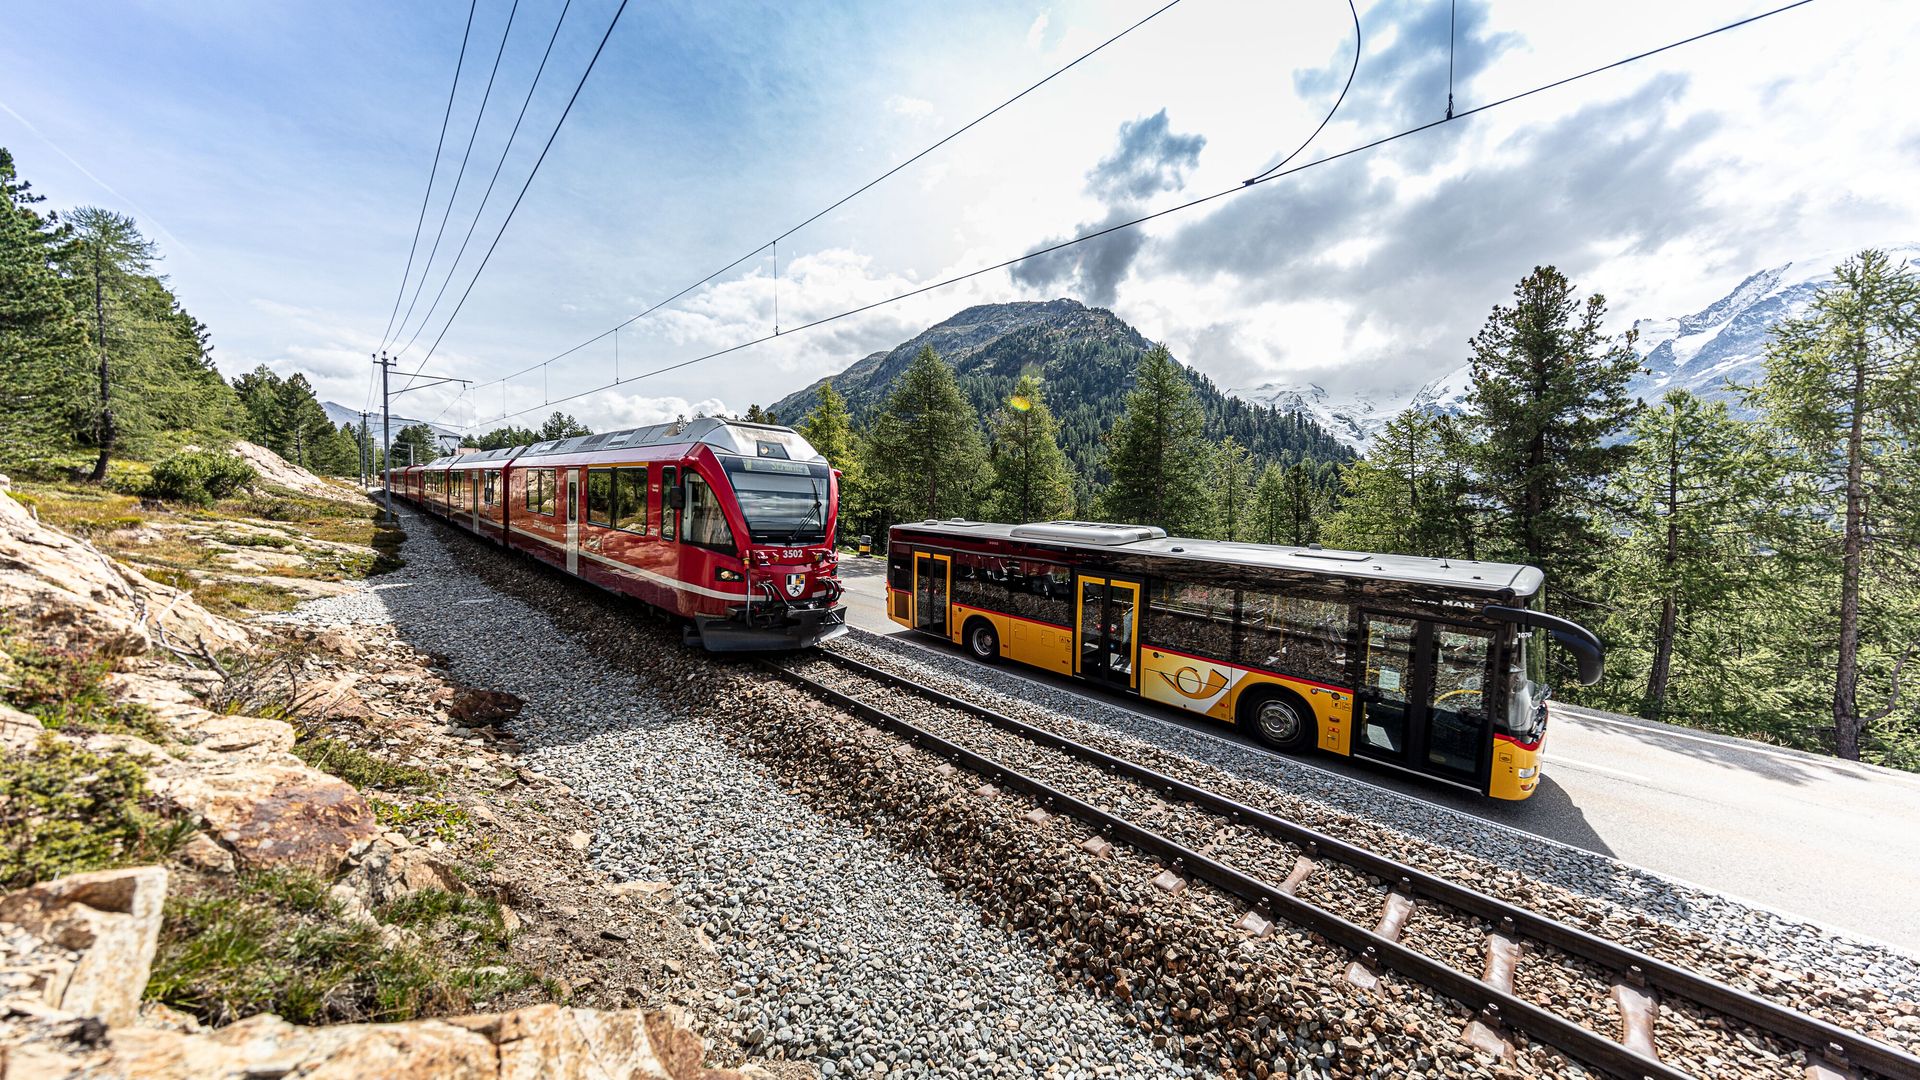 graubündenPASS - Through Graubünden by train and bus